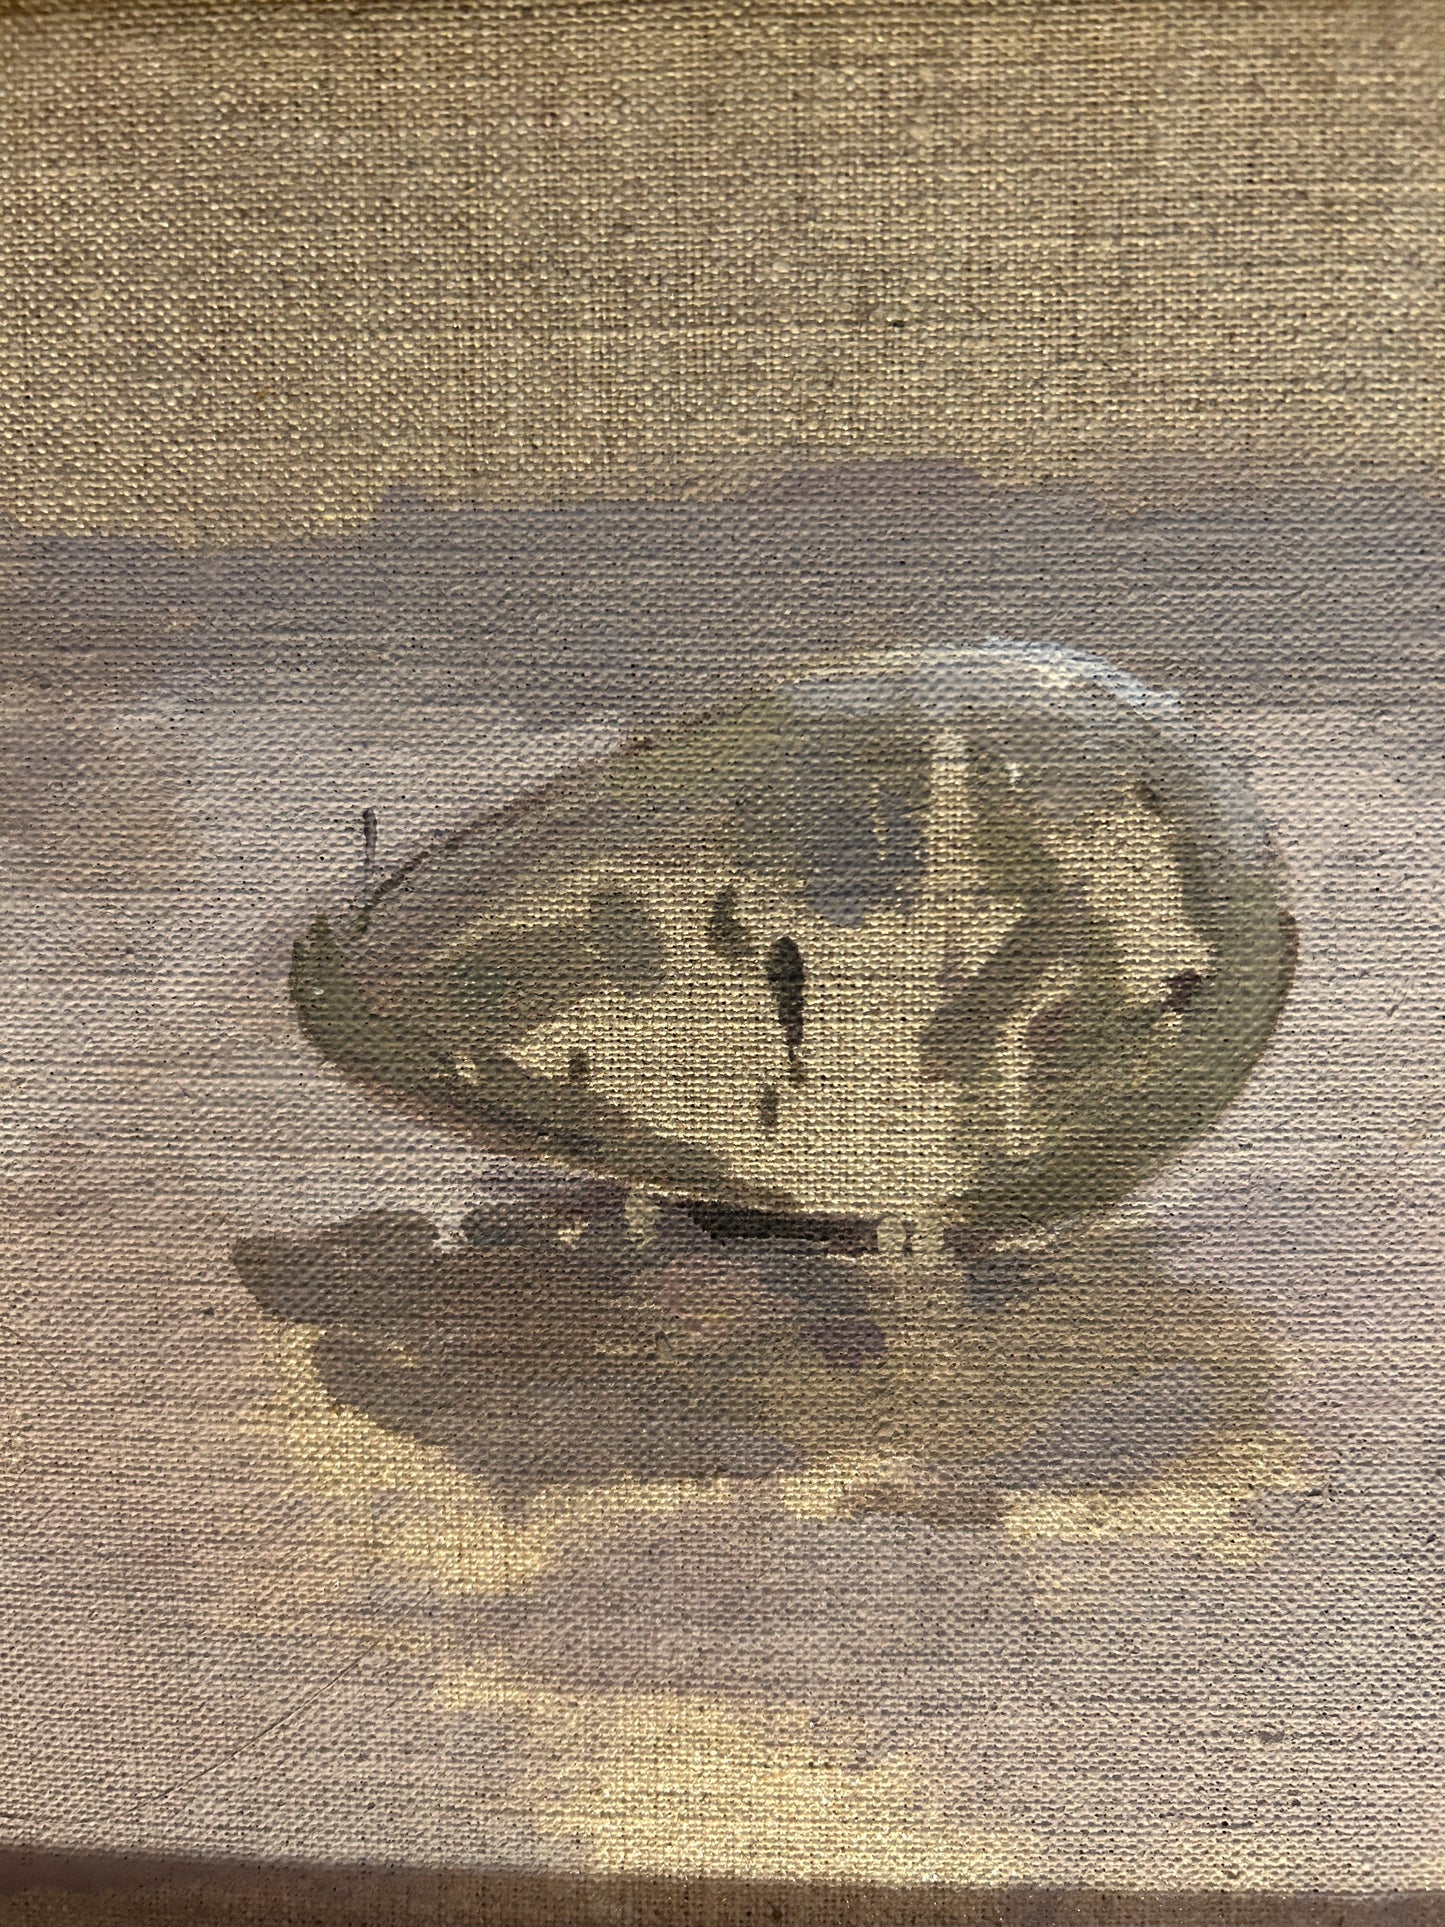 Still Life of Three Quails Eggs Oil on Canvas